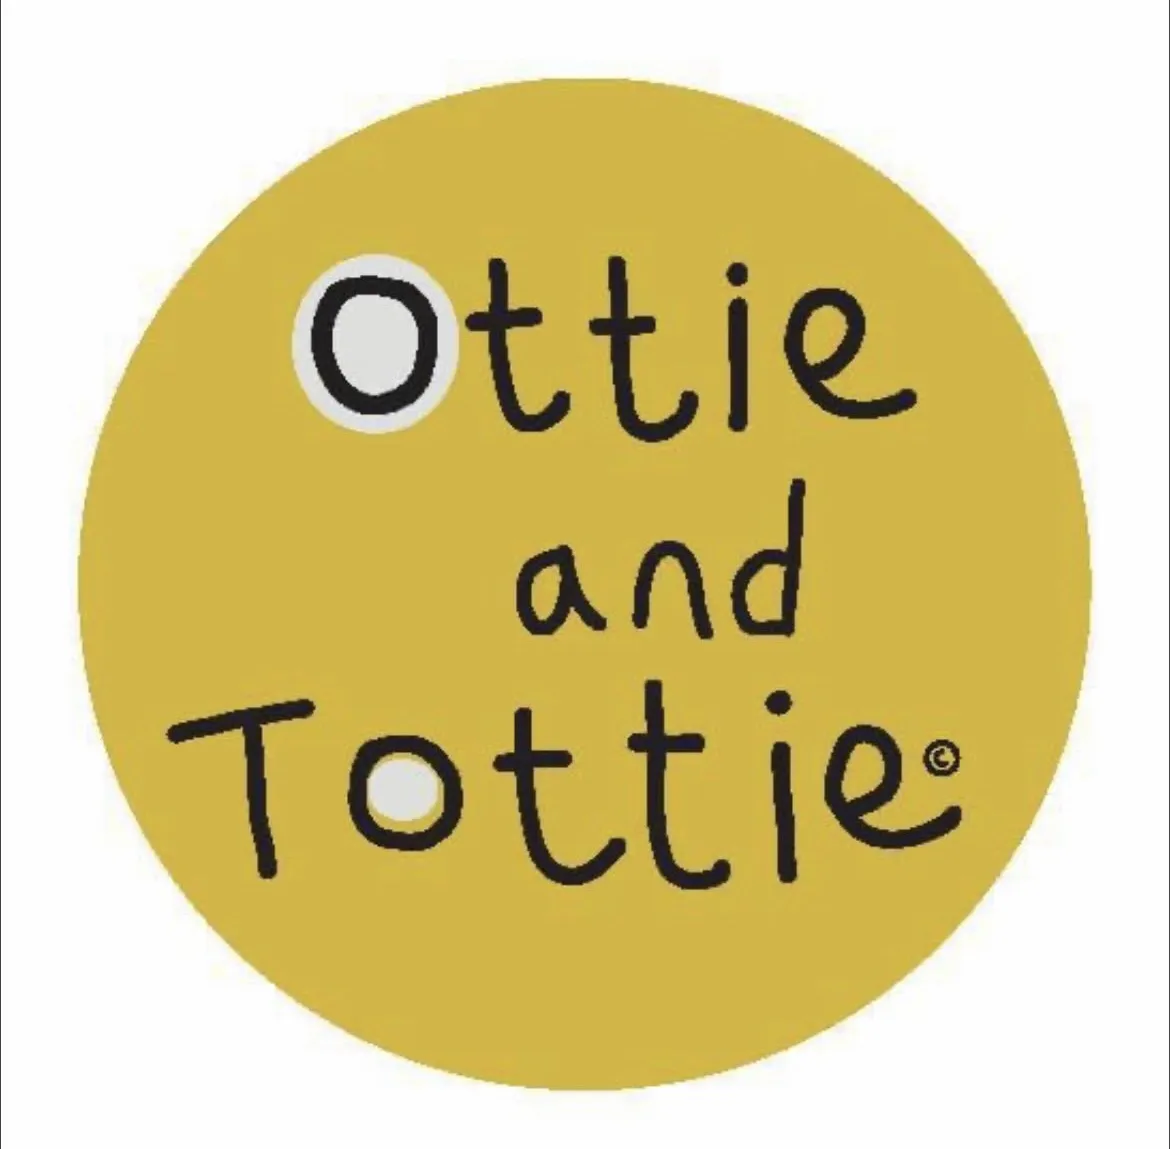 Ottie and Tottie